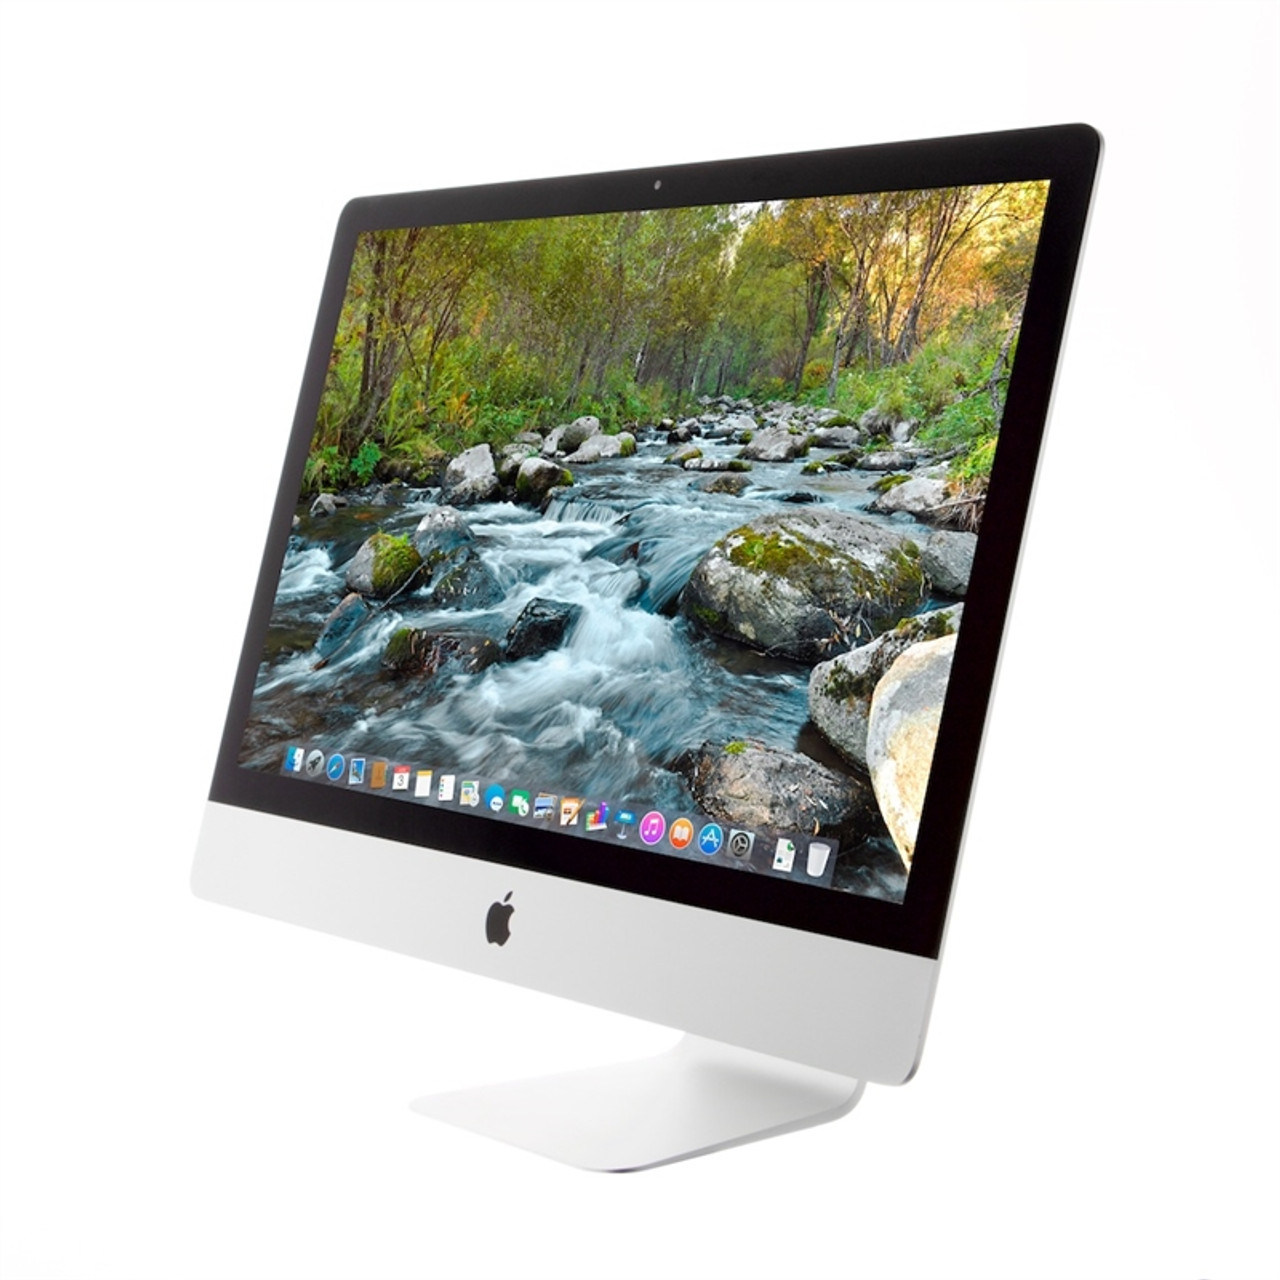 14,700円iMac 27inch Late 2013 (2015年購入)品